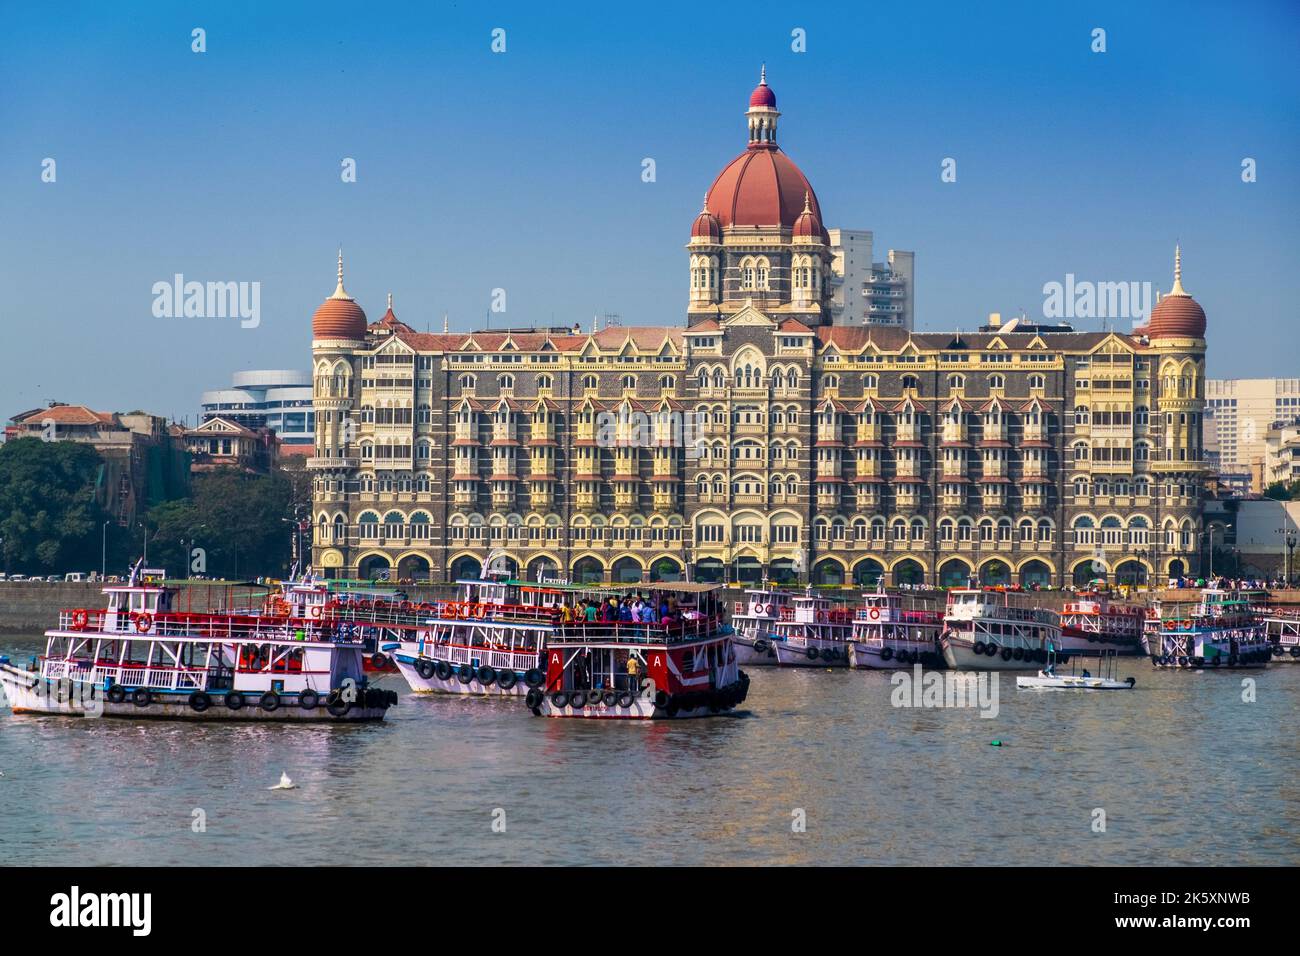 Das Taj Mahal Palace Hotel in Mumbai / Bombay, Indien Stockfoto